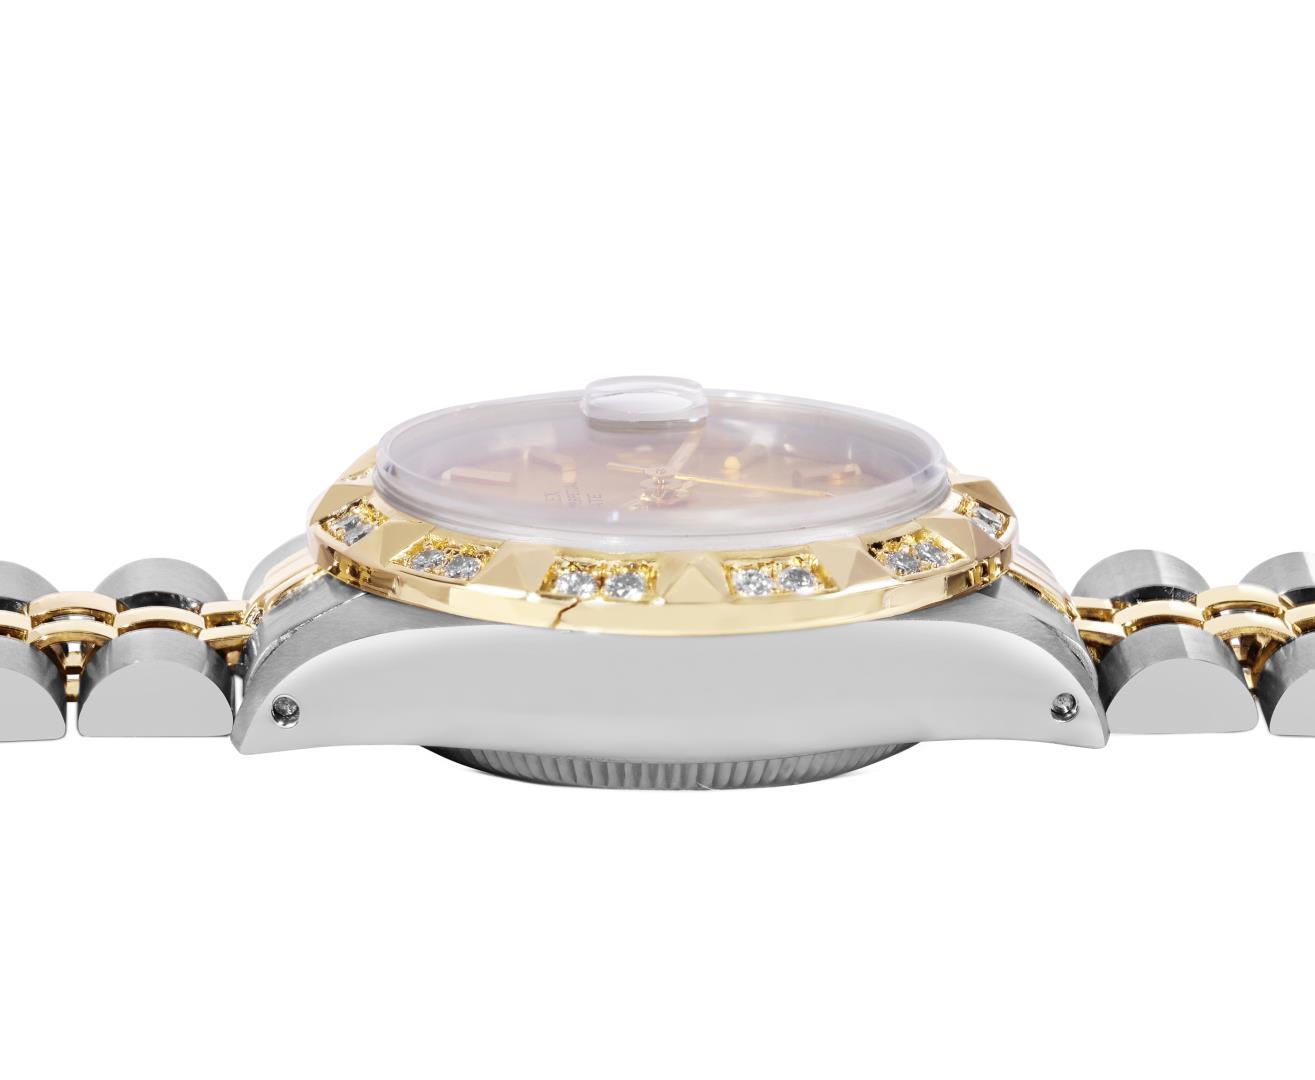 Rolex Ladies Two Tone Champagne Index Diamond Date Wristwatch With Rolex Box